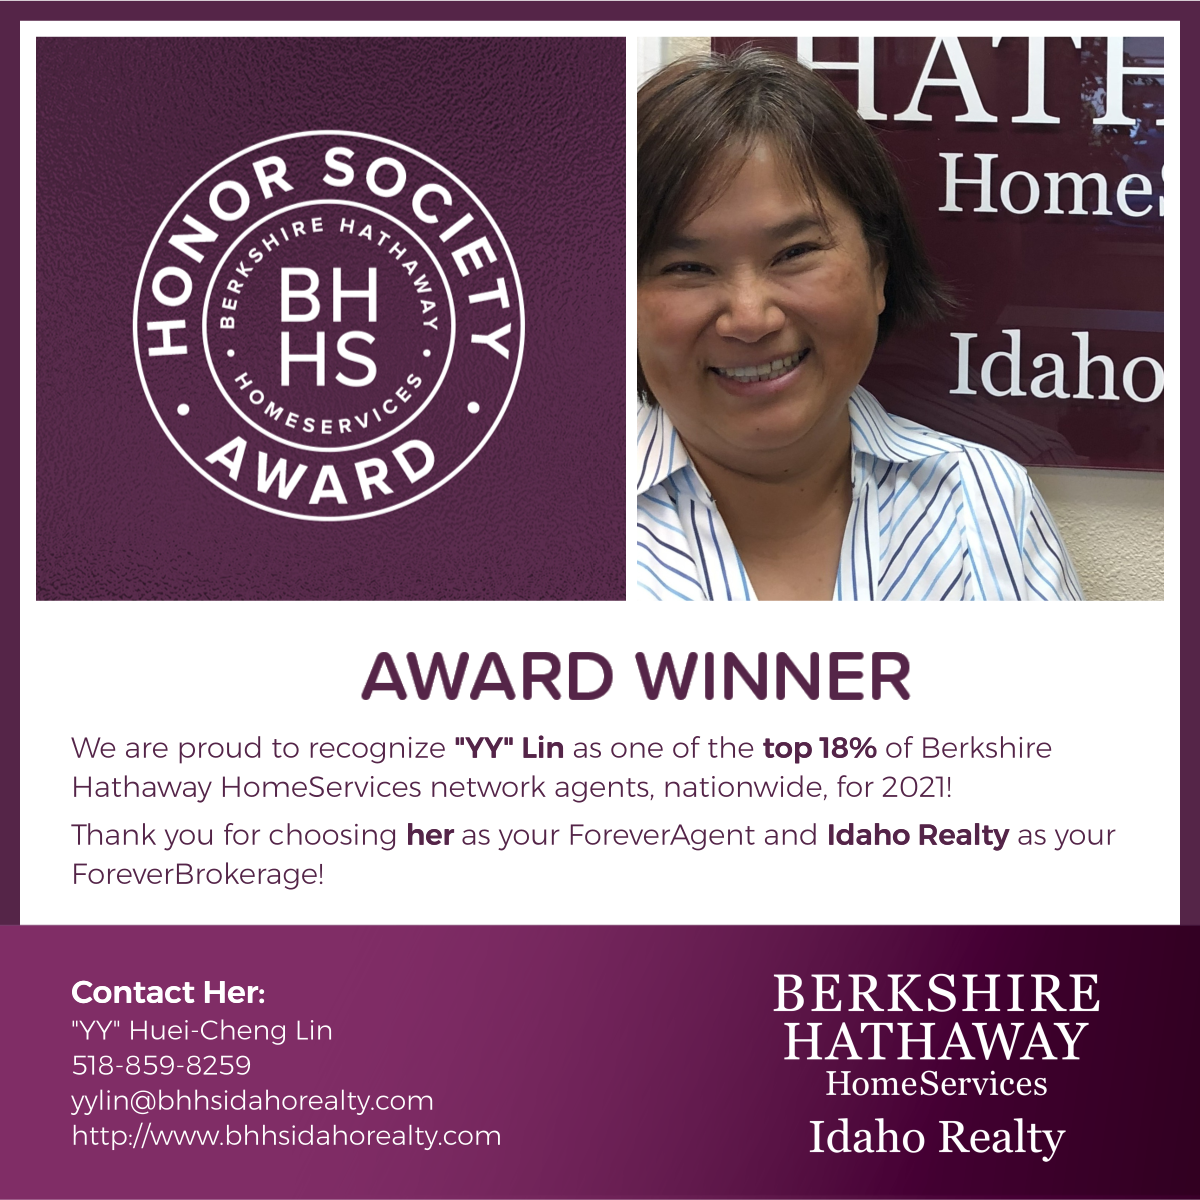 BHHS Threshold Award Winner - Honor Society Award - "YY" Lin